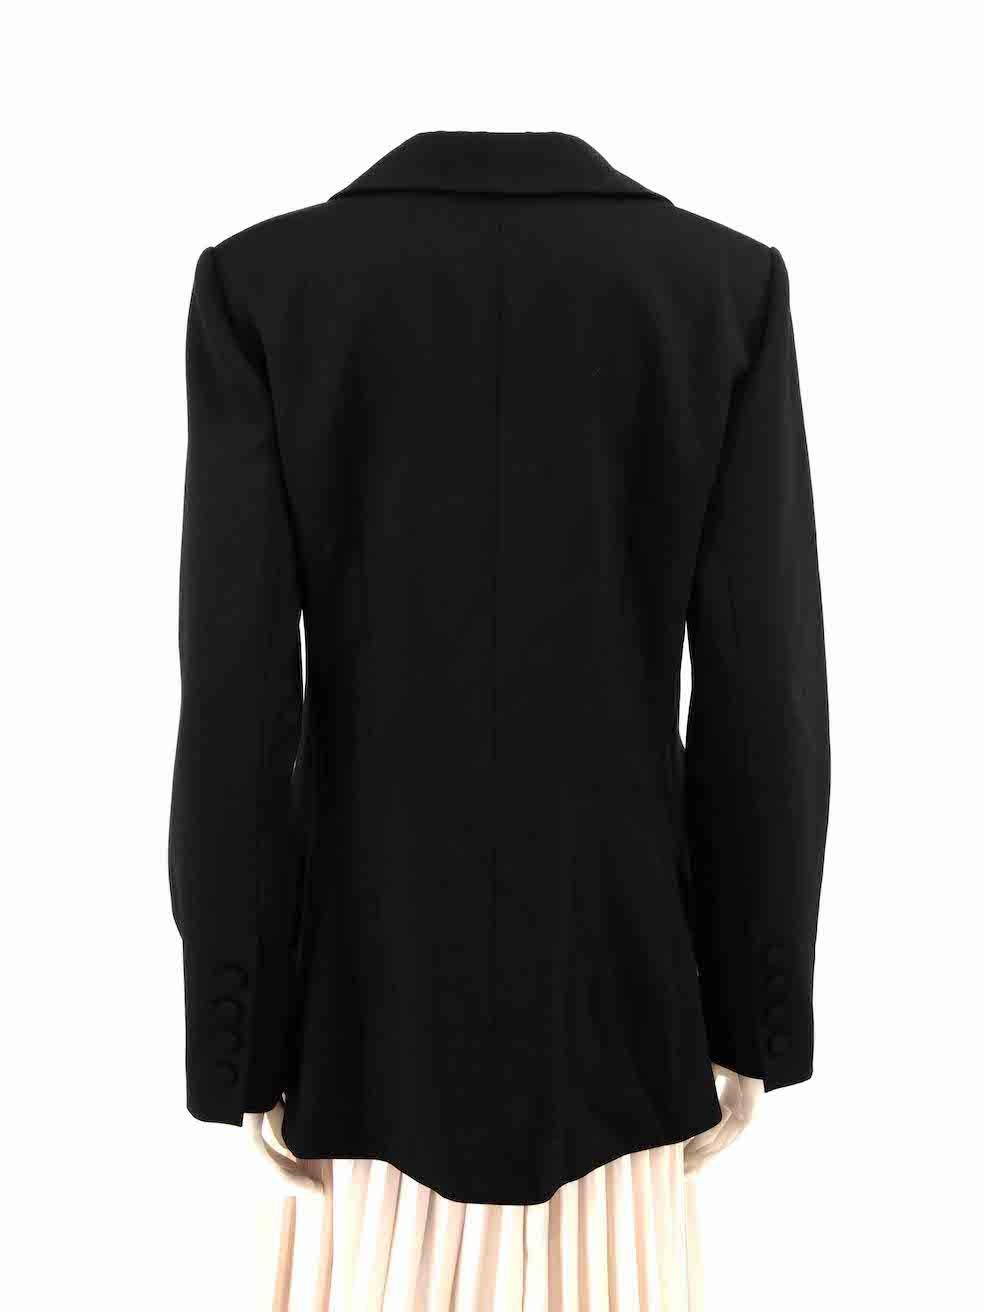 Carolina Herrera Black Wool Satin Lapel Tuxedo Jacket Size XXL In New Condition For Sale In London, GB